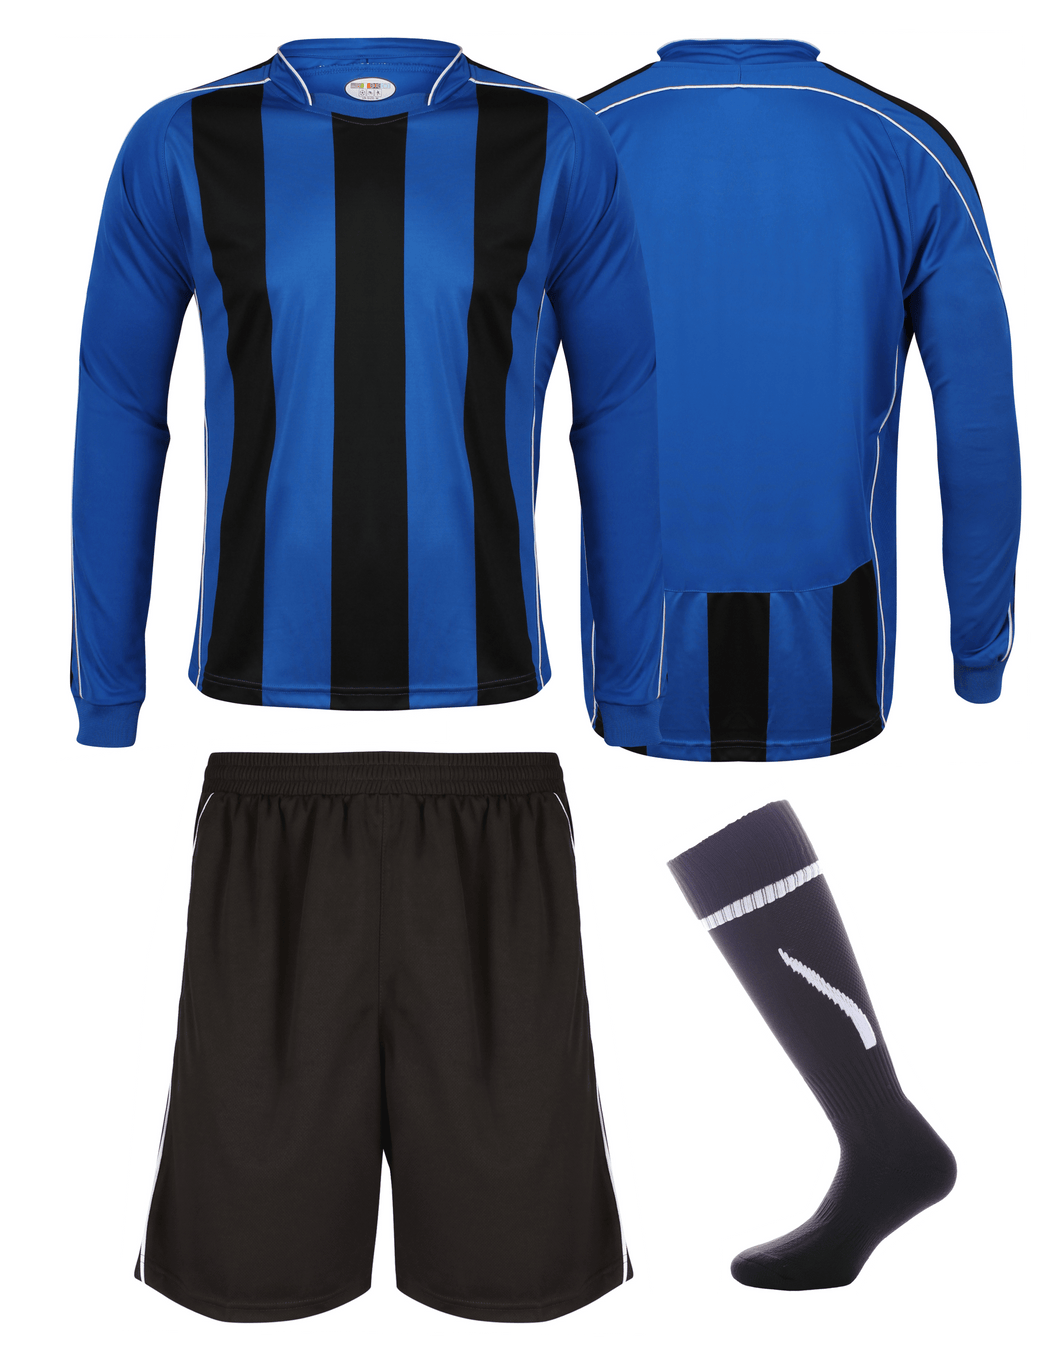 Kids Italia Football Kits Gazelle Sports UK Yes SB/28 Col A) Royal Blue/ Black/ White